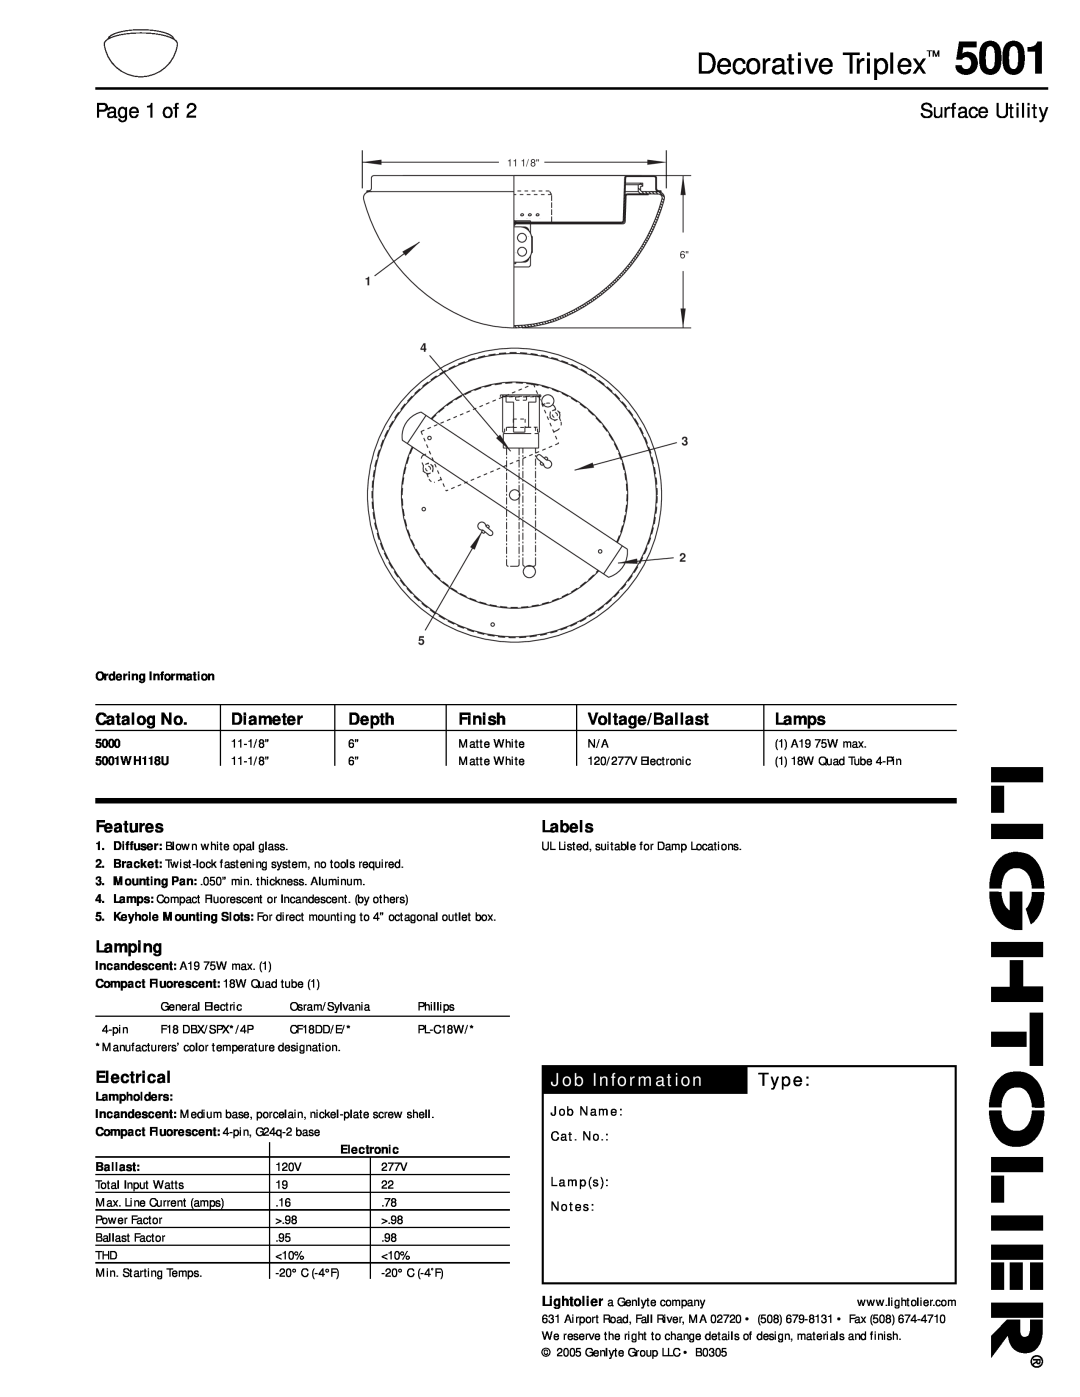 Lightolier 5001 manual Page 1 of, Surface Utility, Decorative Triplex, Catalog No, Diameter, Depth, Finish, Lamps, Labels 